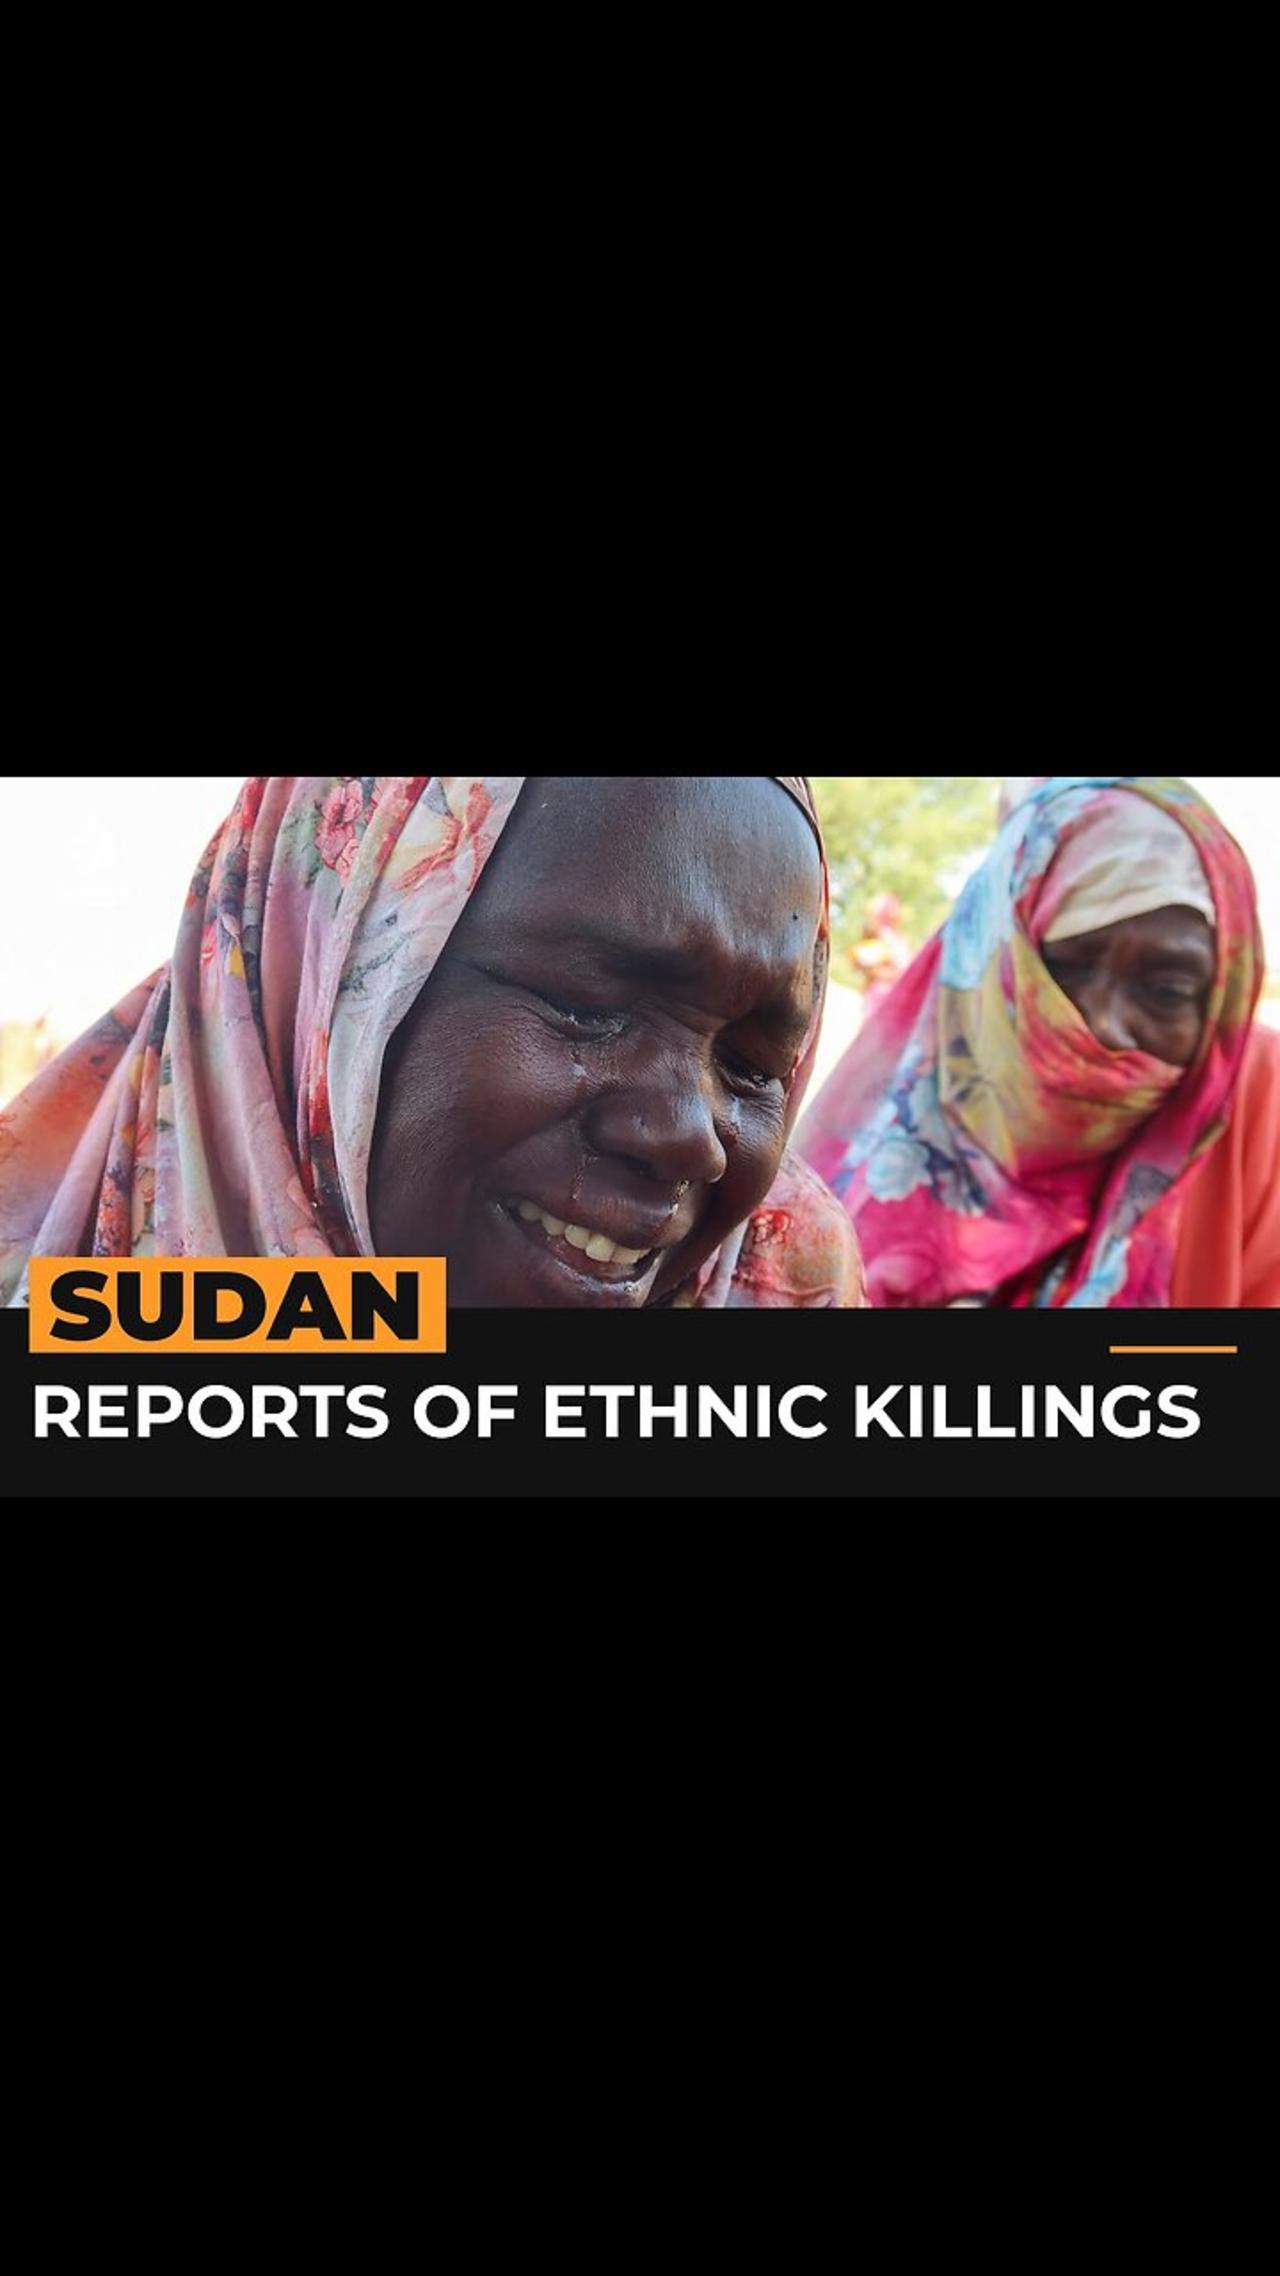 Sudan's Darfur refugees report ethnically driven killings by RSF | Al Jazeera Newsfeed